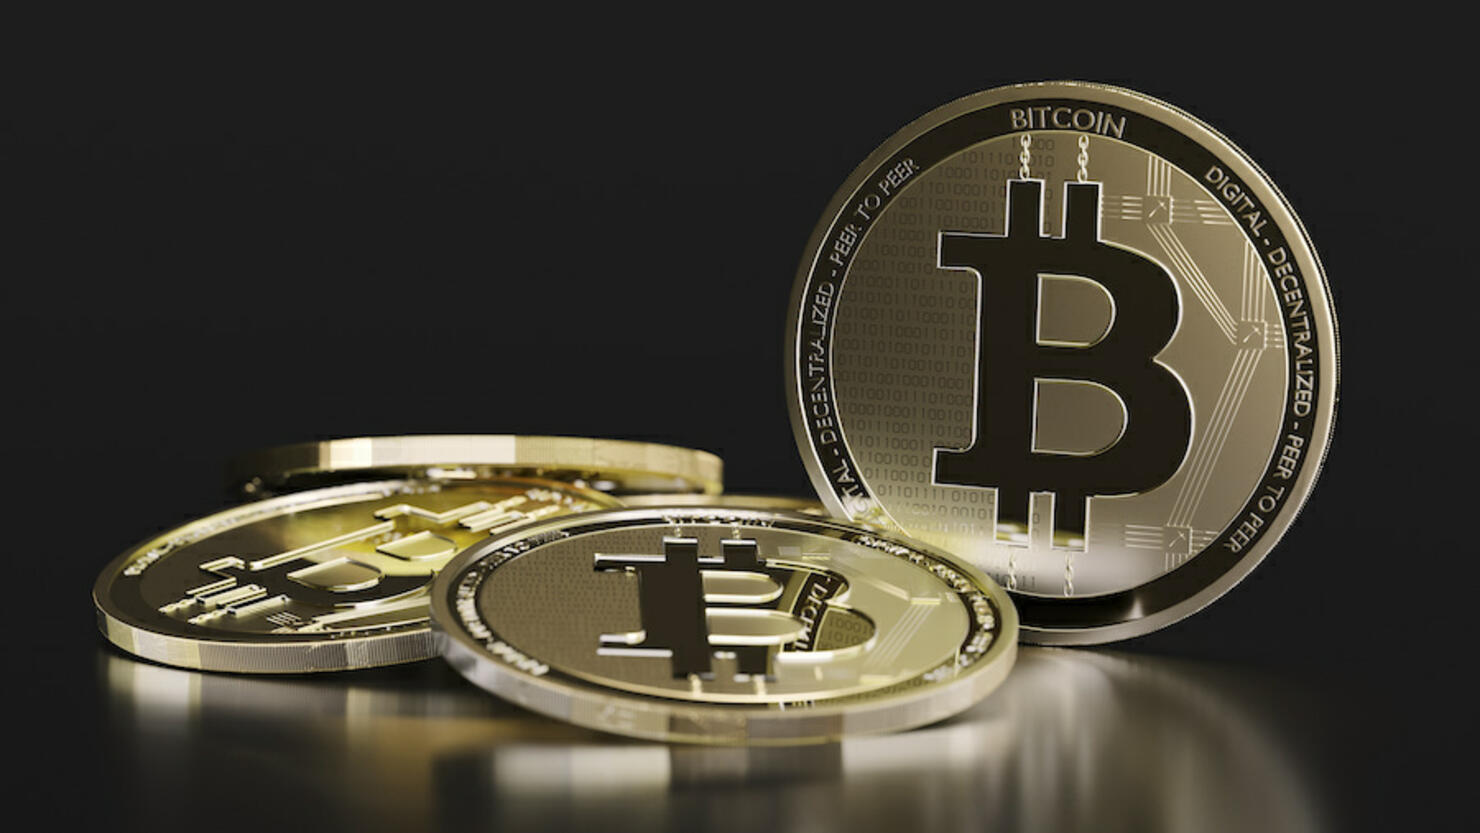 CGI image of bitcoin cryptocurrency